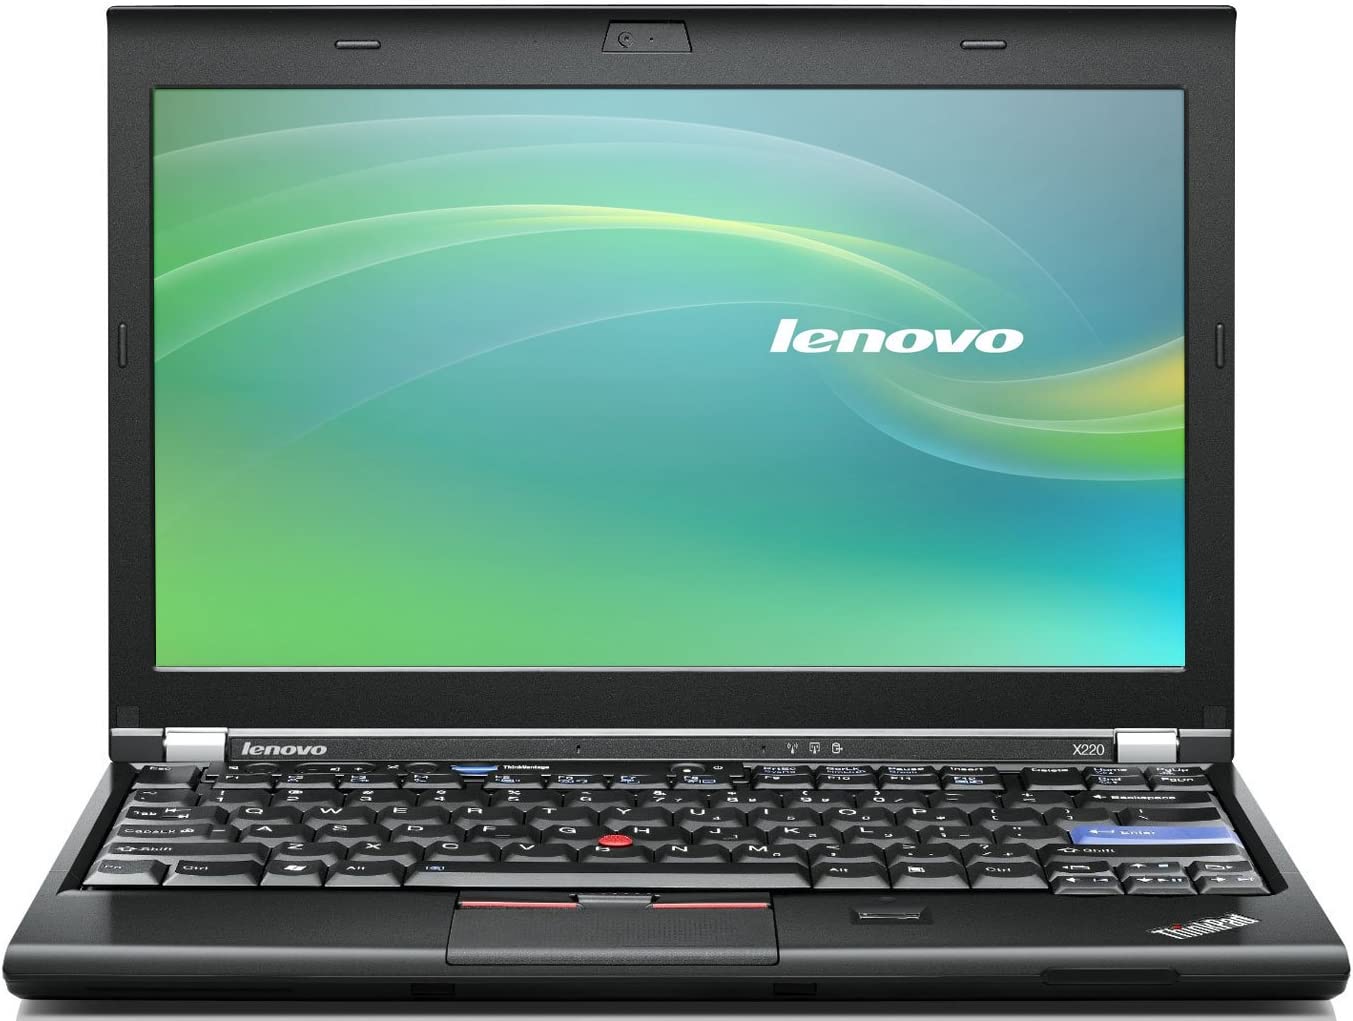 Lenovo ThinkPad X220i Celeron 847/4GB/320GB/12.5